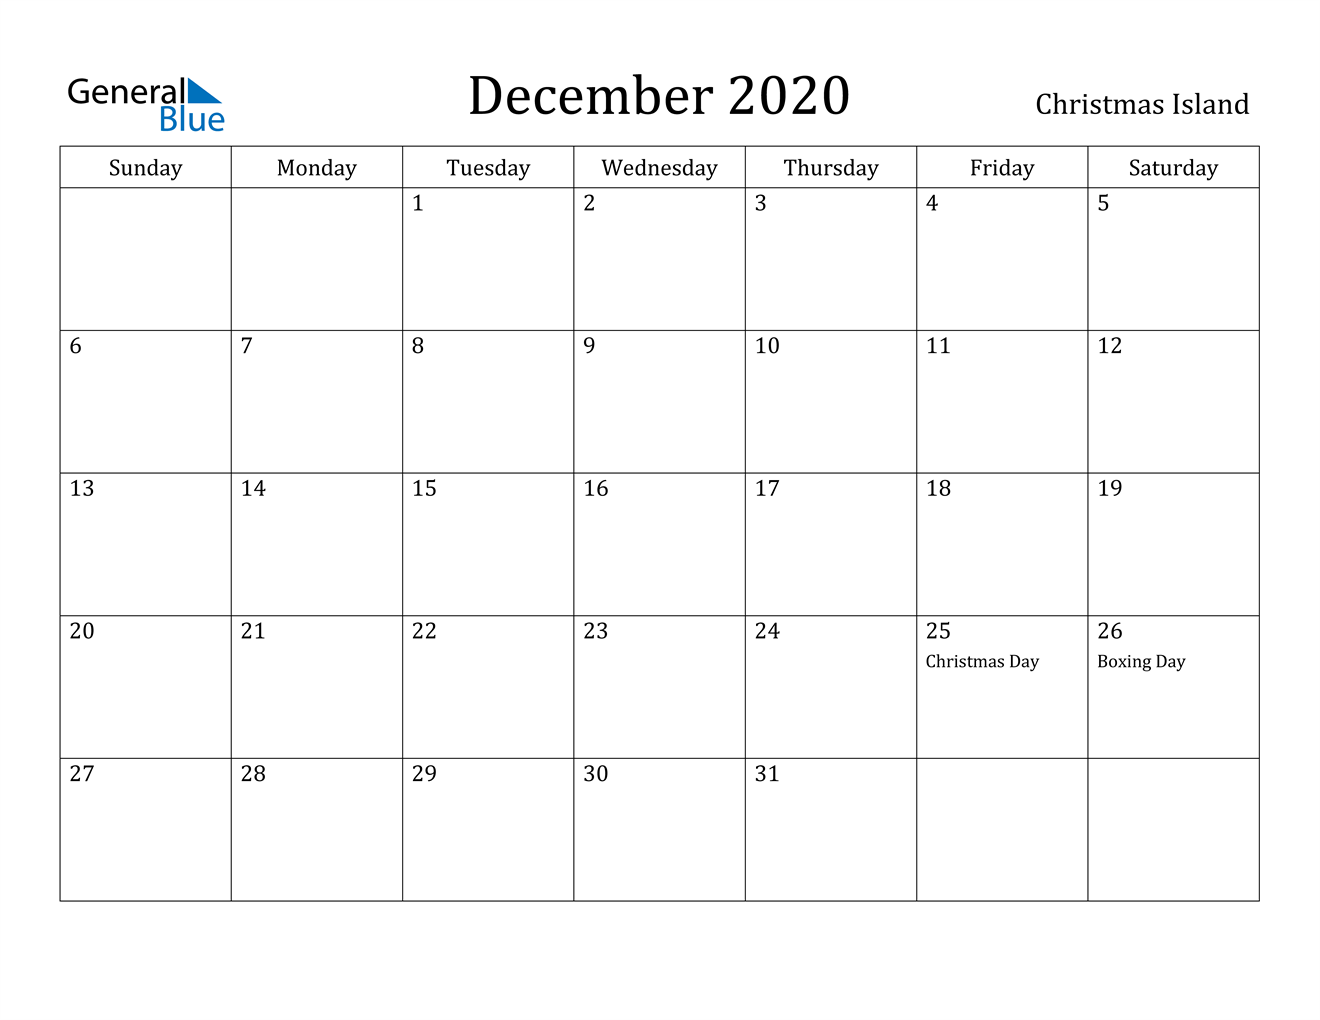 December 2020 Calendar - Christmas Island